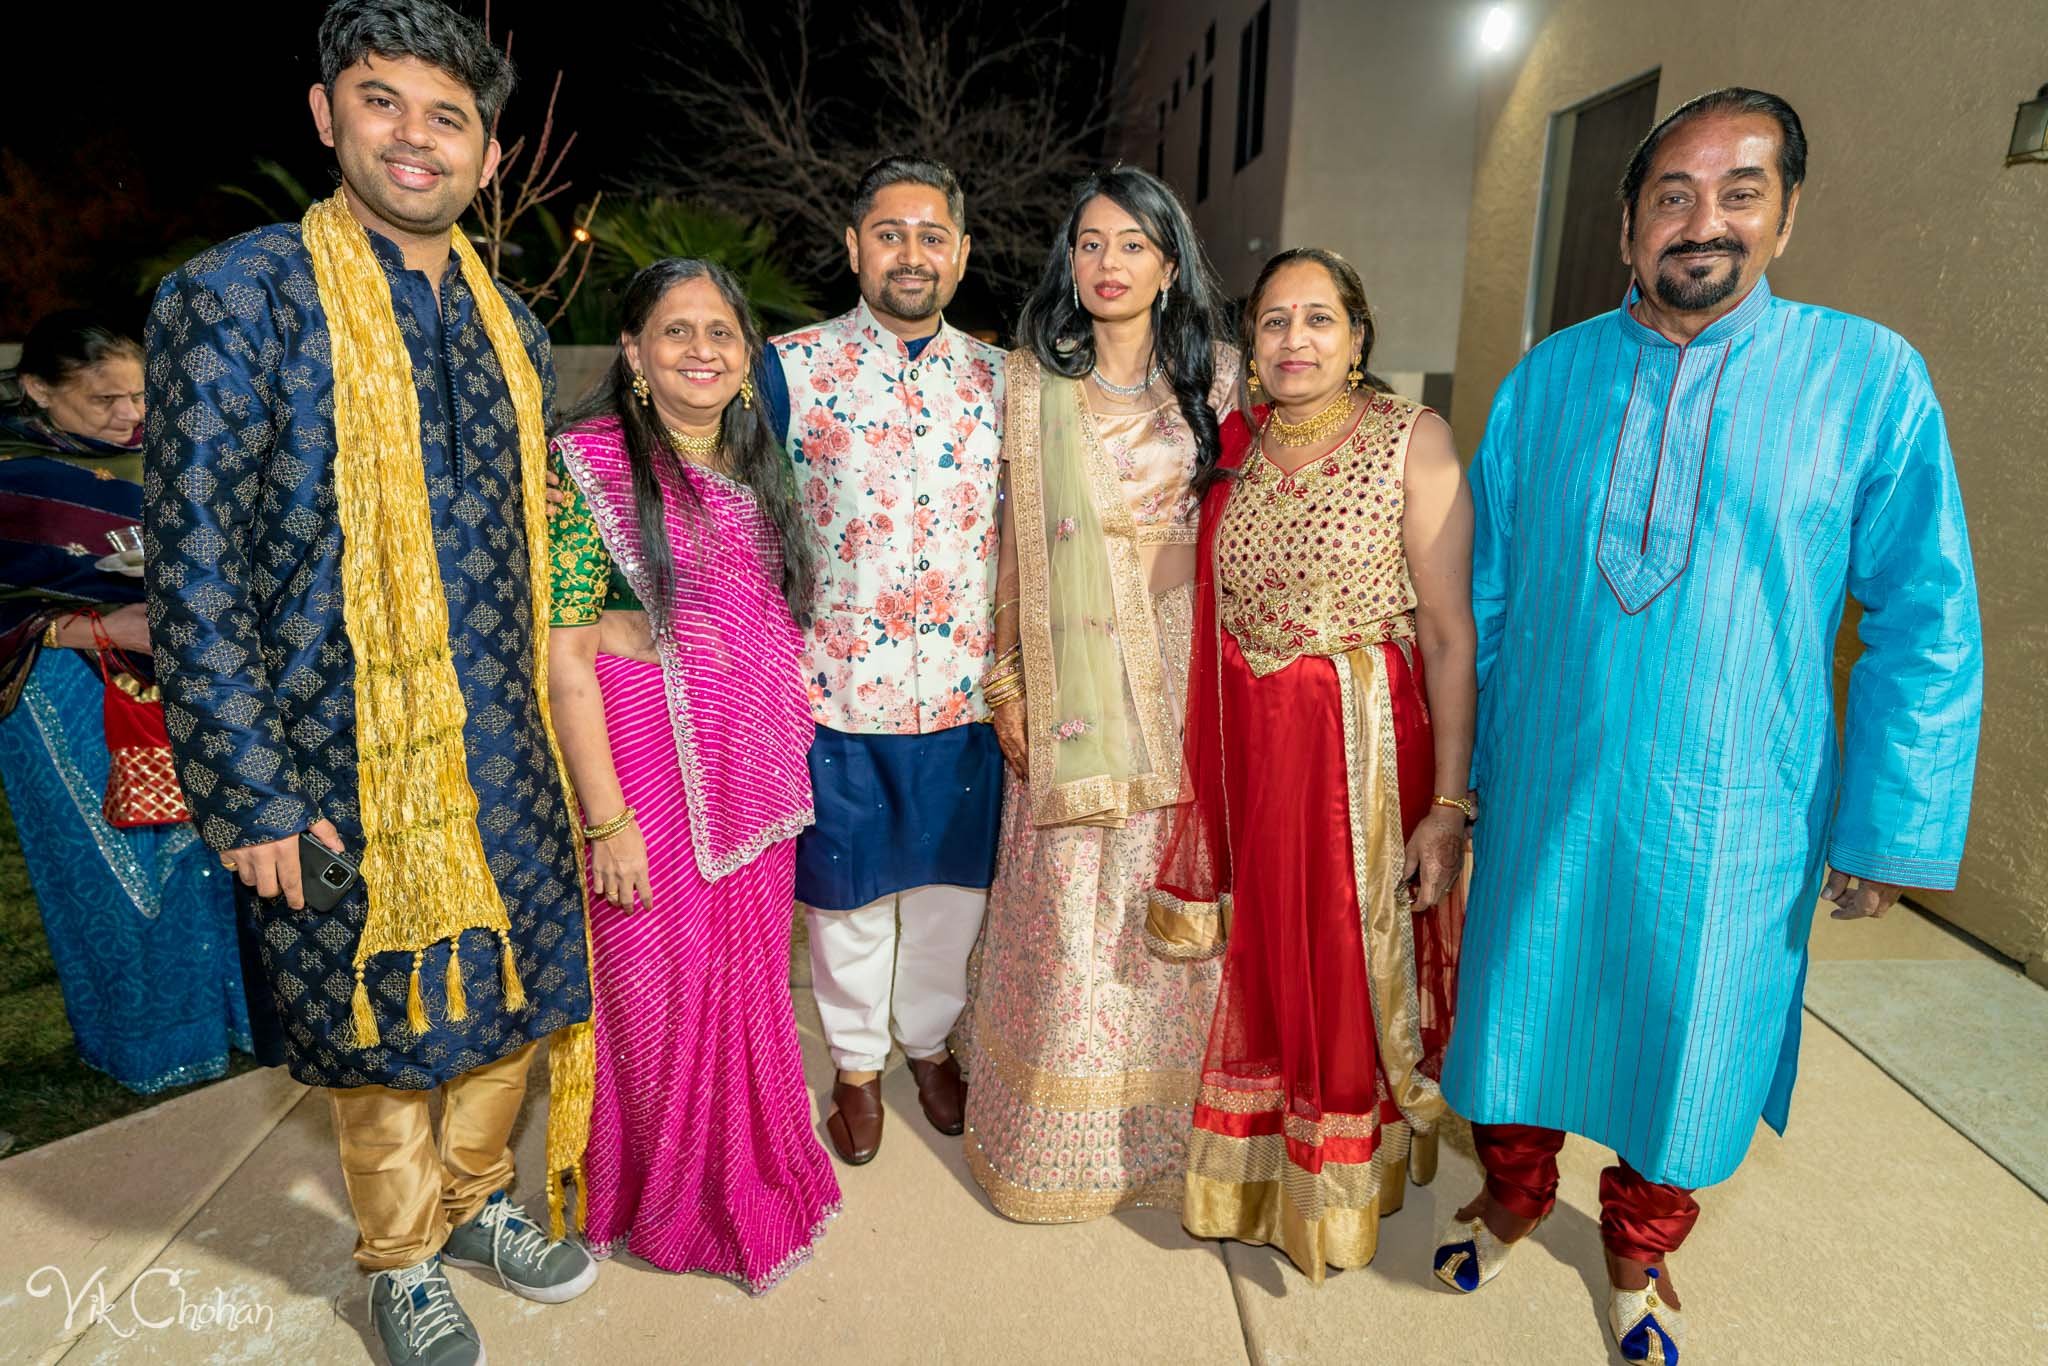 2022-02-04-Hely-&-Parth-Garba-Night-Indian-Wedding-Vik-Chohan-Photography-Photo-Booth-Social-Media-VCP-071.jpg